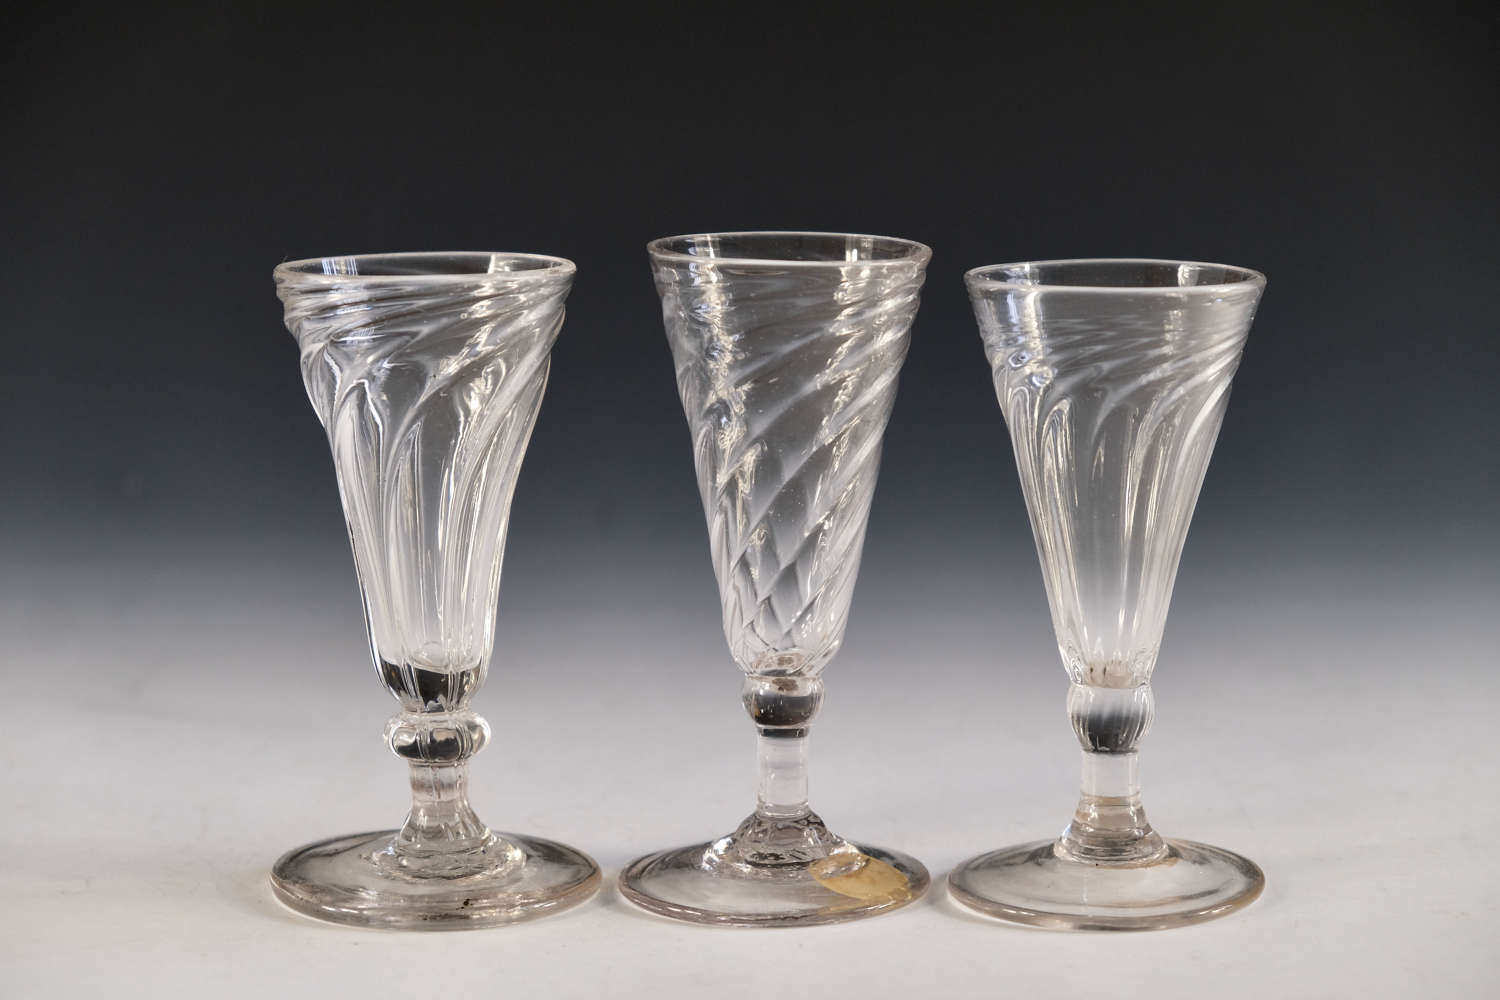 Antique glass - Three wrythen ale glasses English c1800